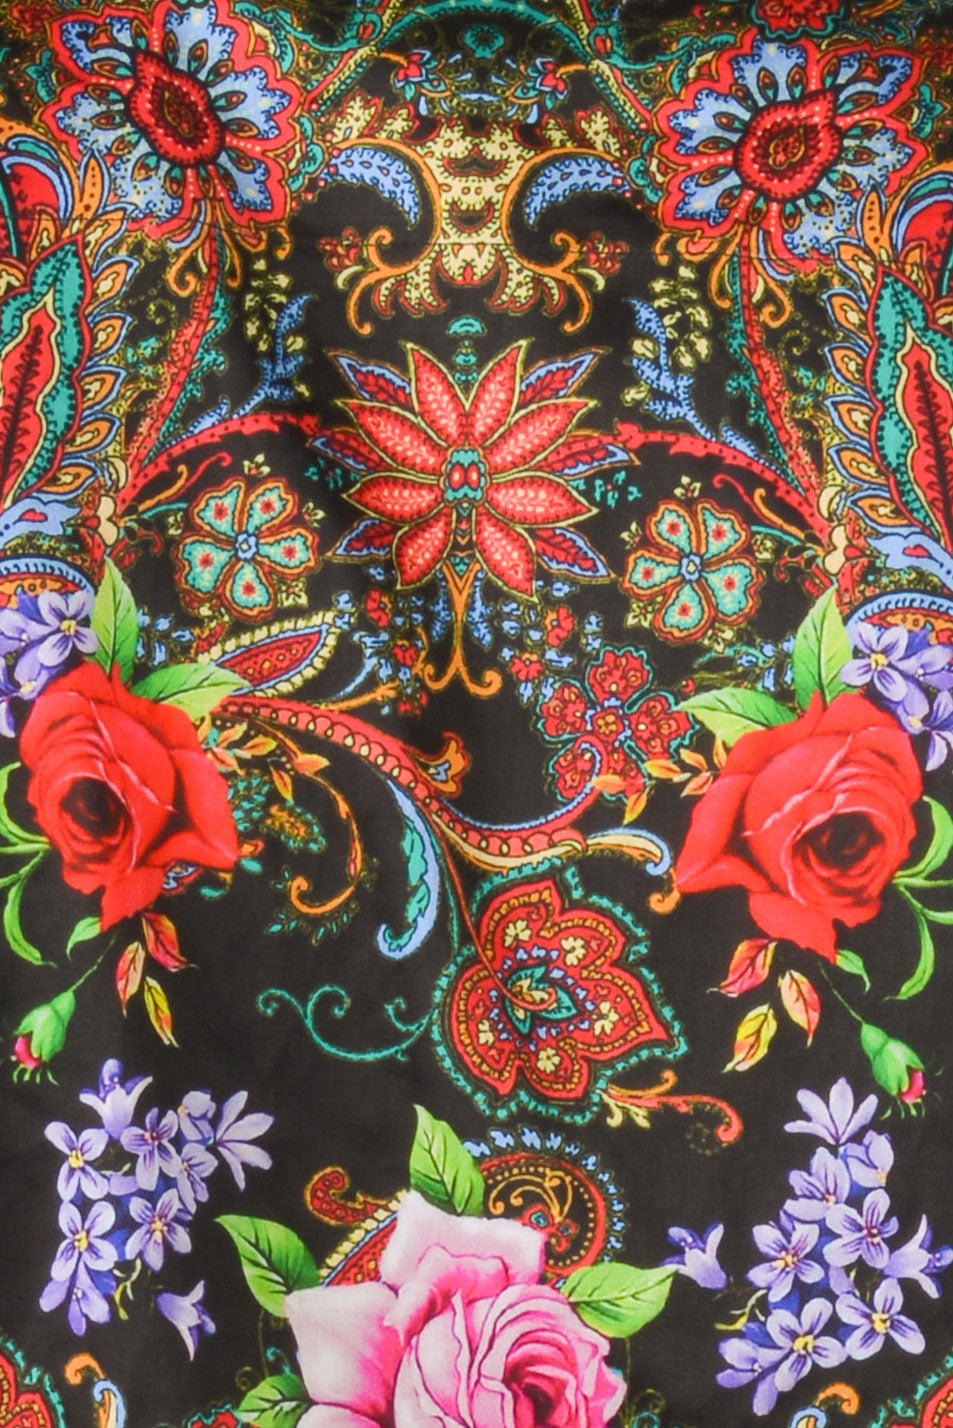 BARABAS Men's Floral Baroque Long Sleeve button down Shirt SP07 Black